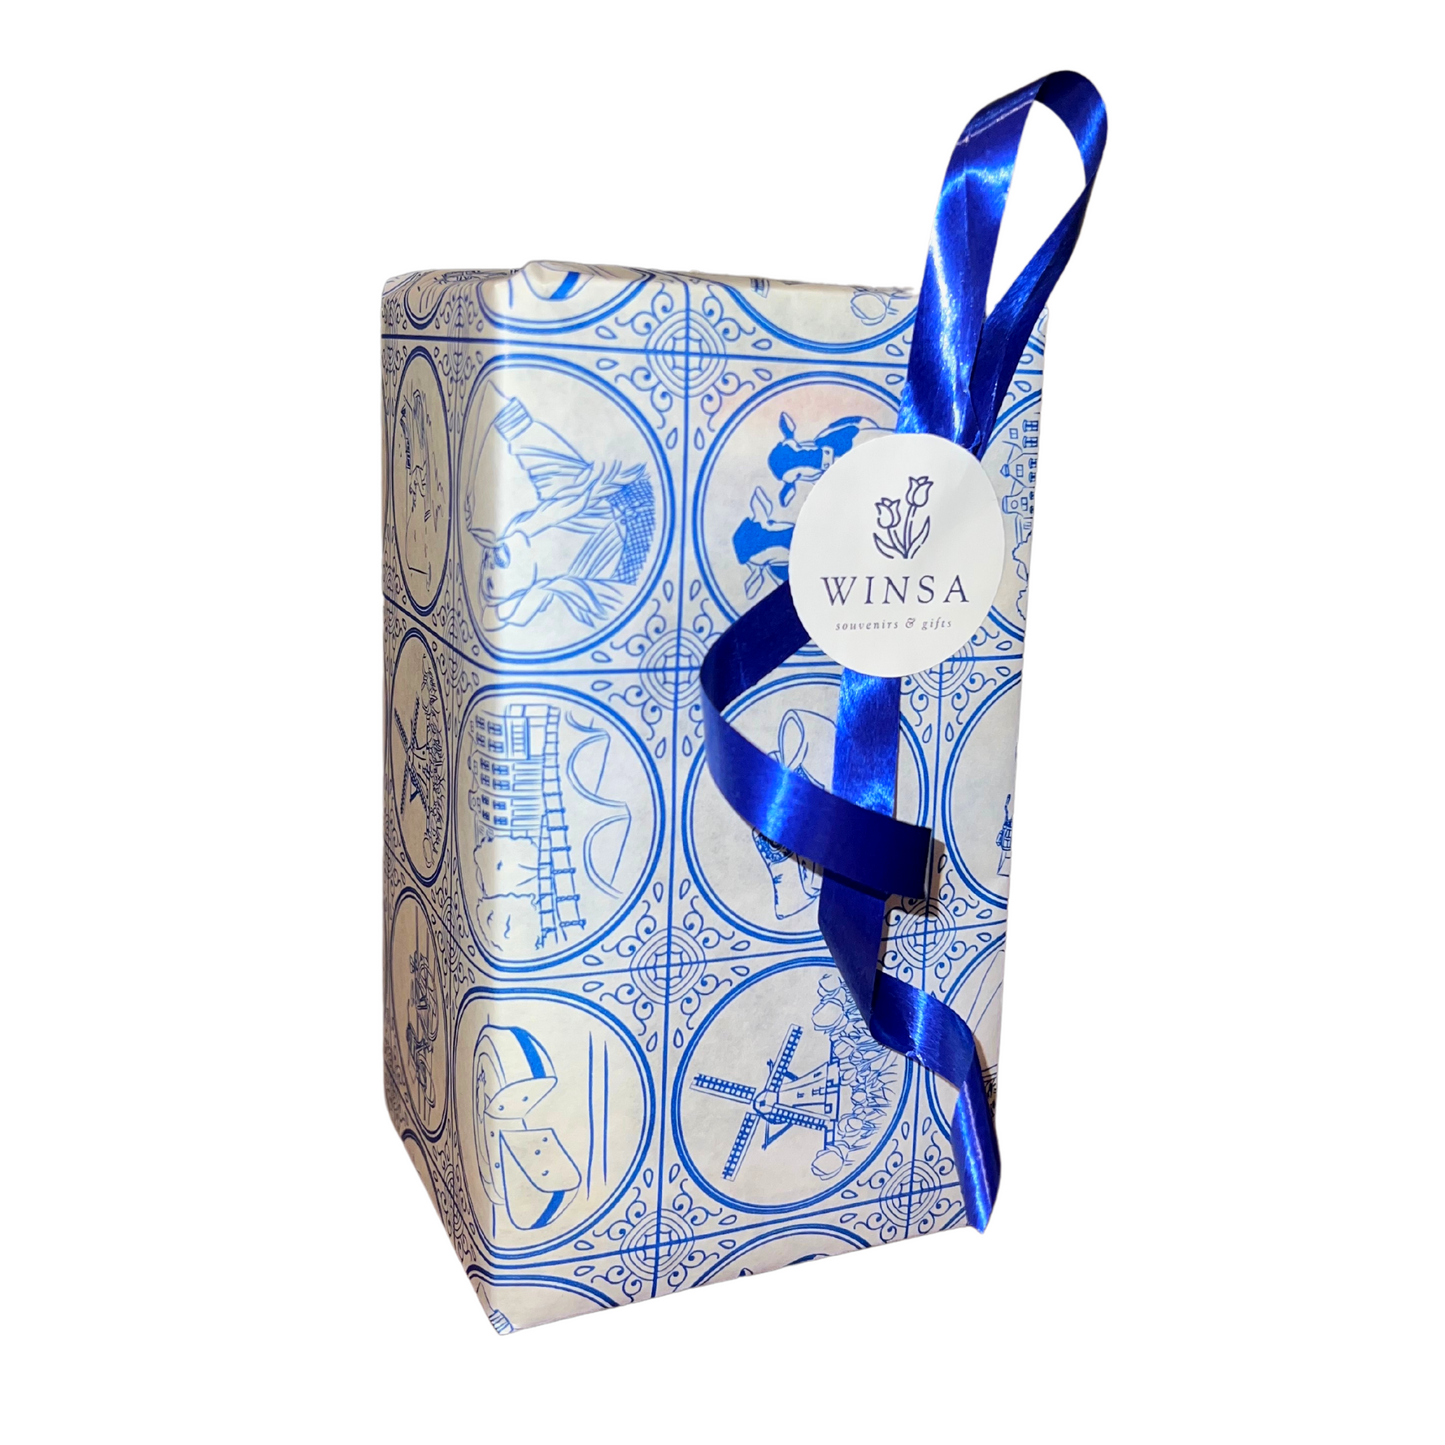 souvenirs delfts blauw delfts blue gift papier cadeauverpakking hollands nederland